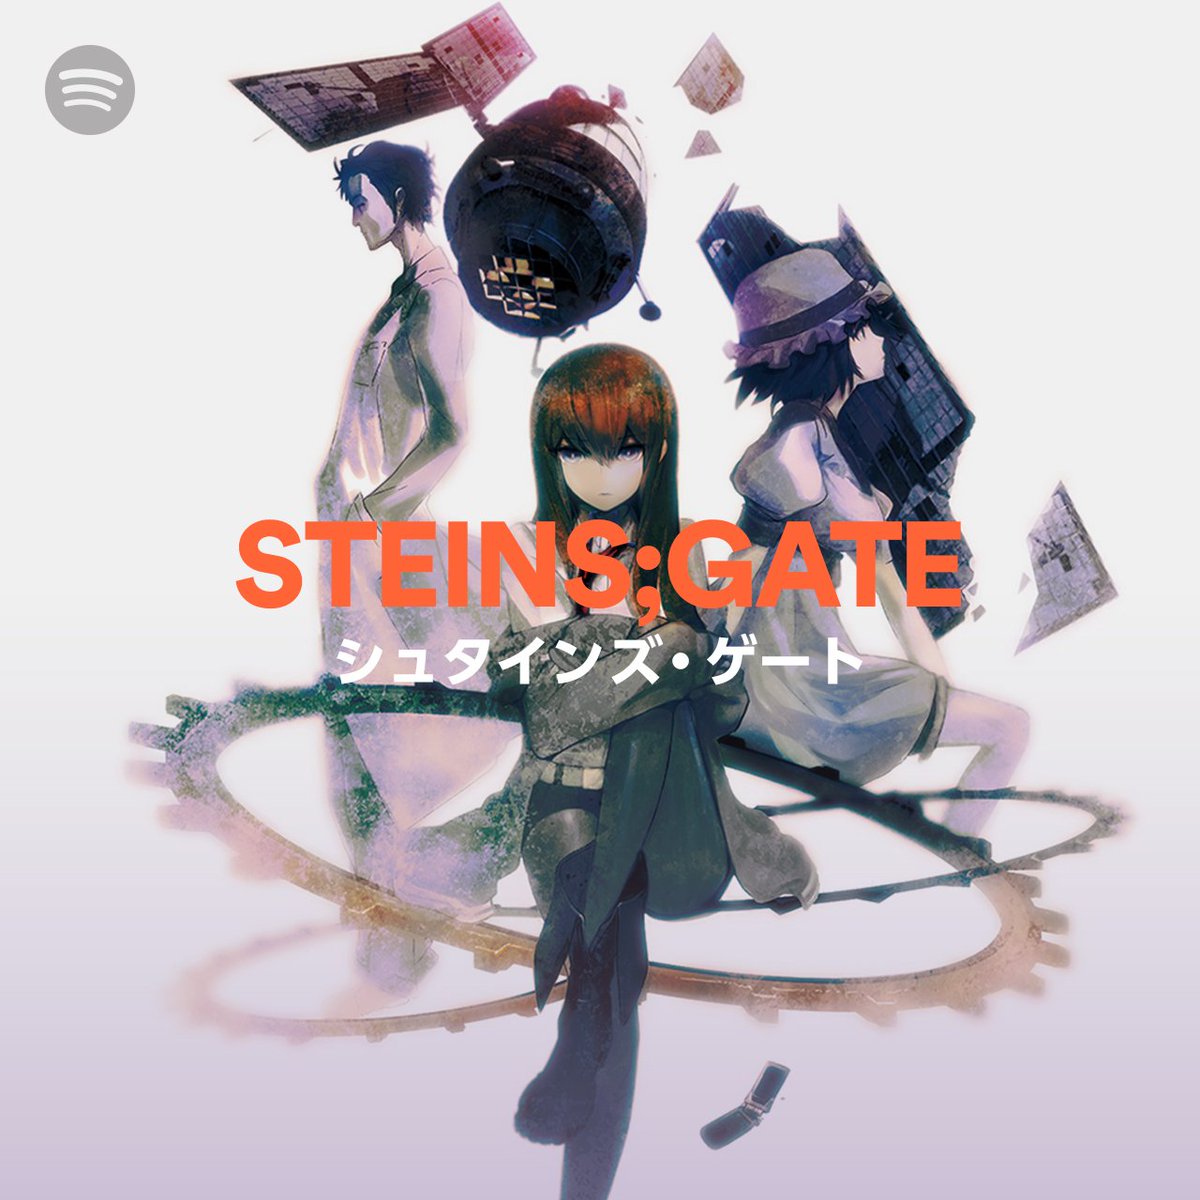 Spotify Japan V Twitter Steins Gate シュタインズ ゲート Sg Anime 公式プレイリストを公開 いとうかなこ Info Kanako Ito が歌う シュタゲゼロ の主題歌 ファティマ からスタート 音楽と共に シュタゲ の世界へ T Co Dl7kfsywat